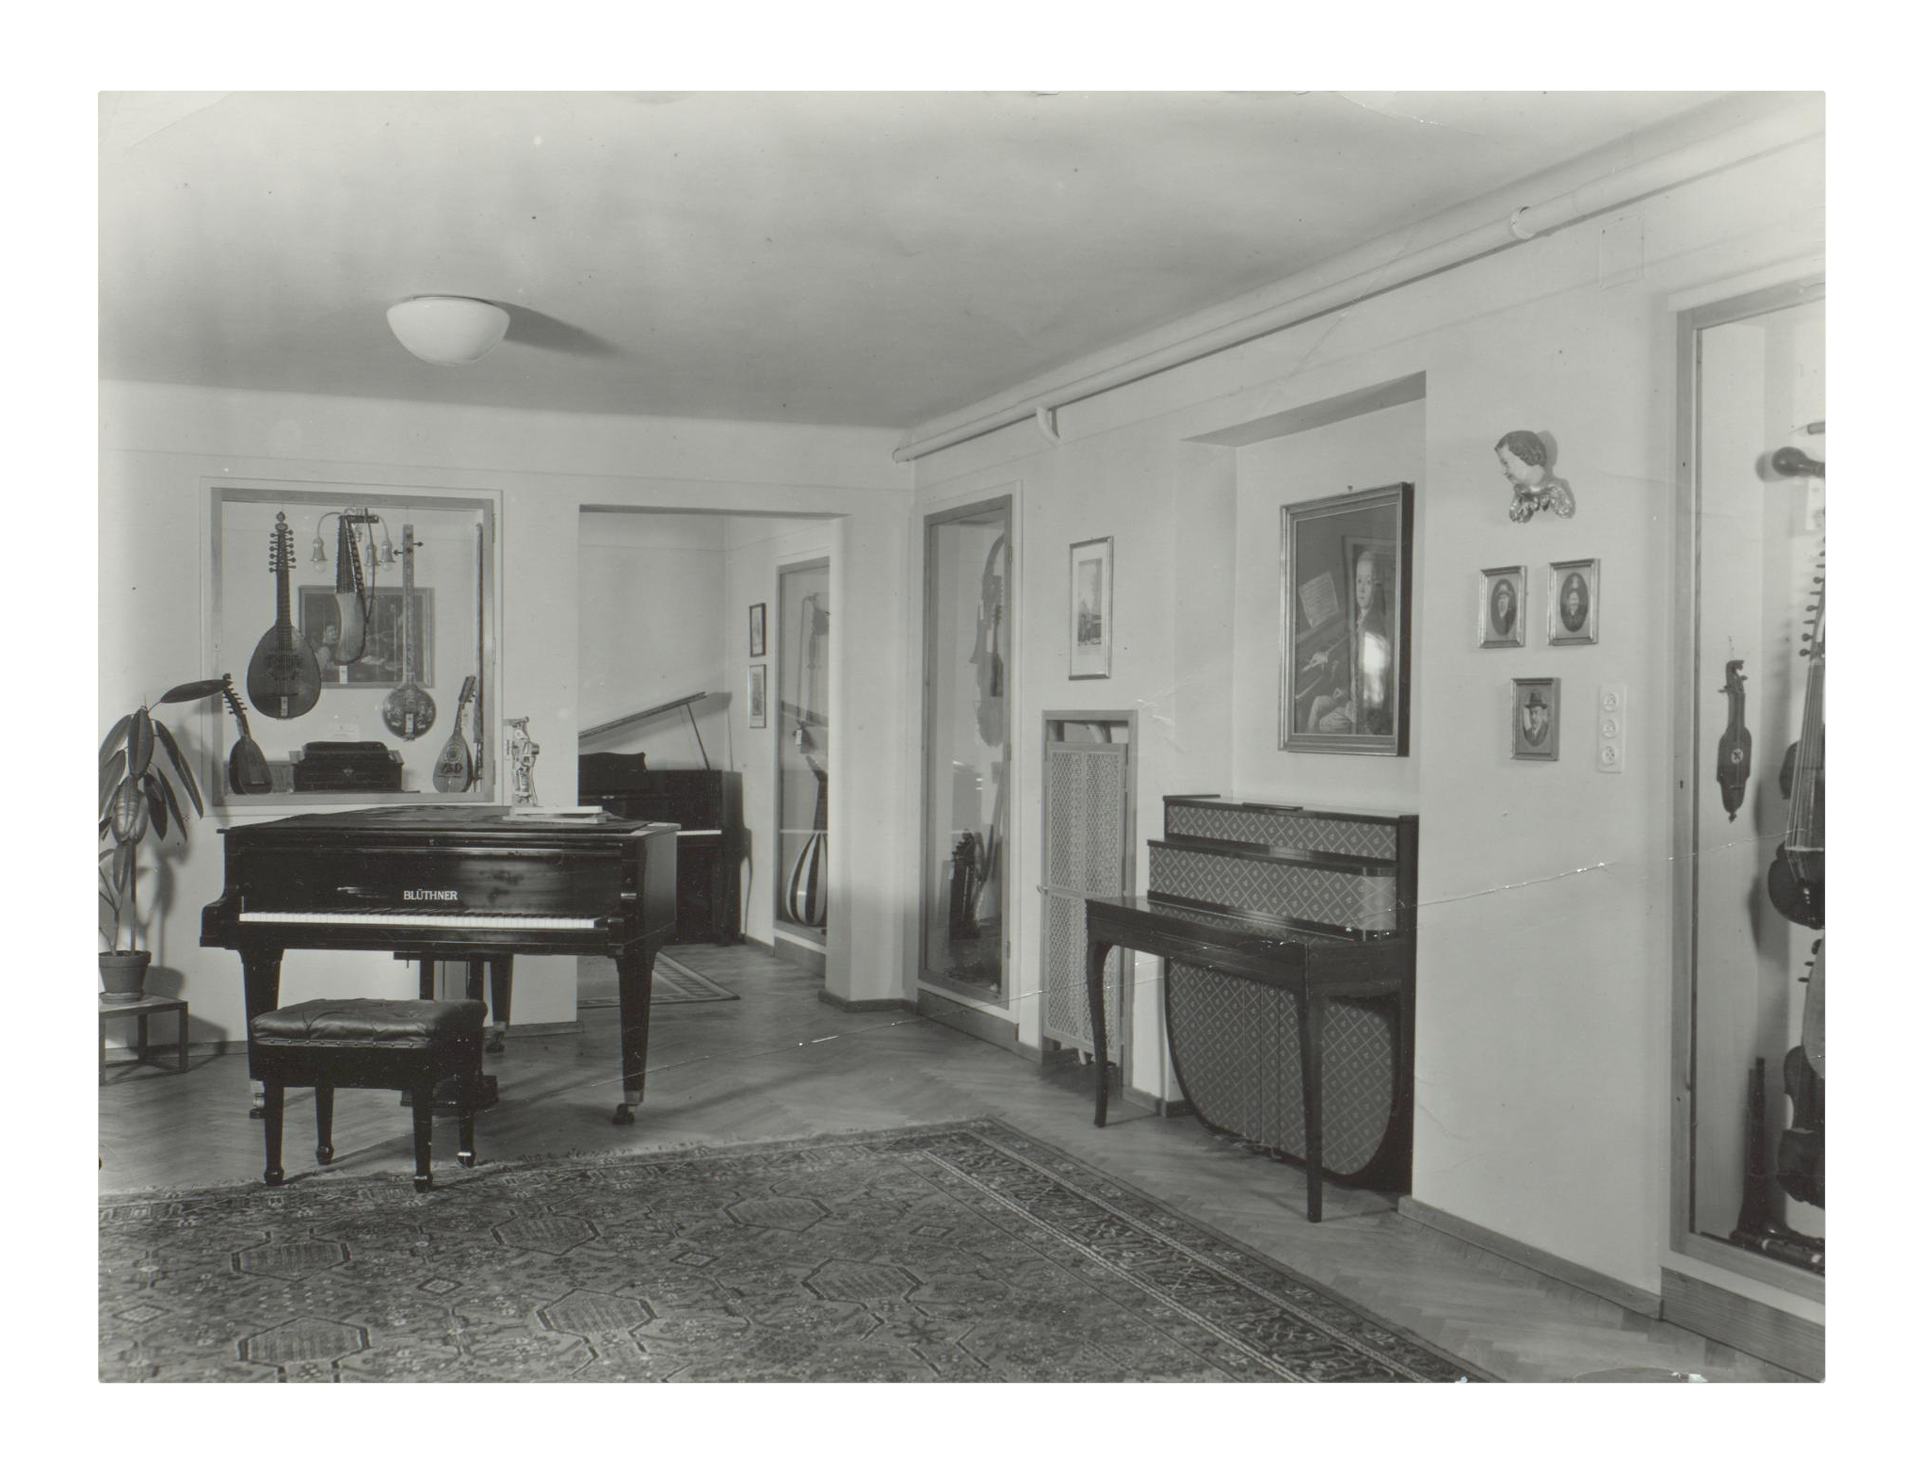 Ausstellungsraum im Pianohaus Rück, Tafelfeldstr. 24, 1. Stock, vor 1945